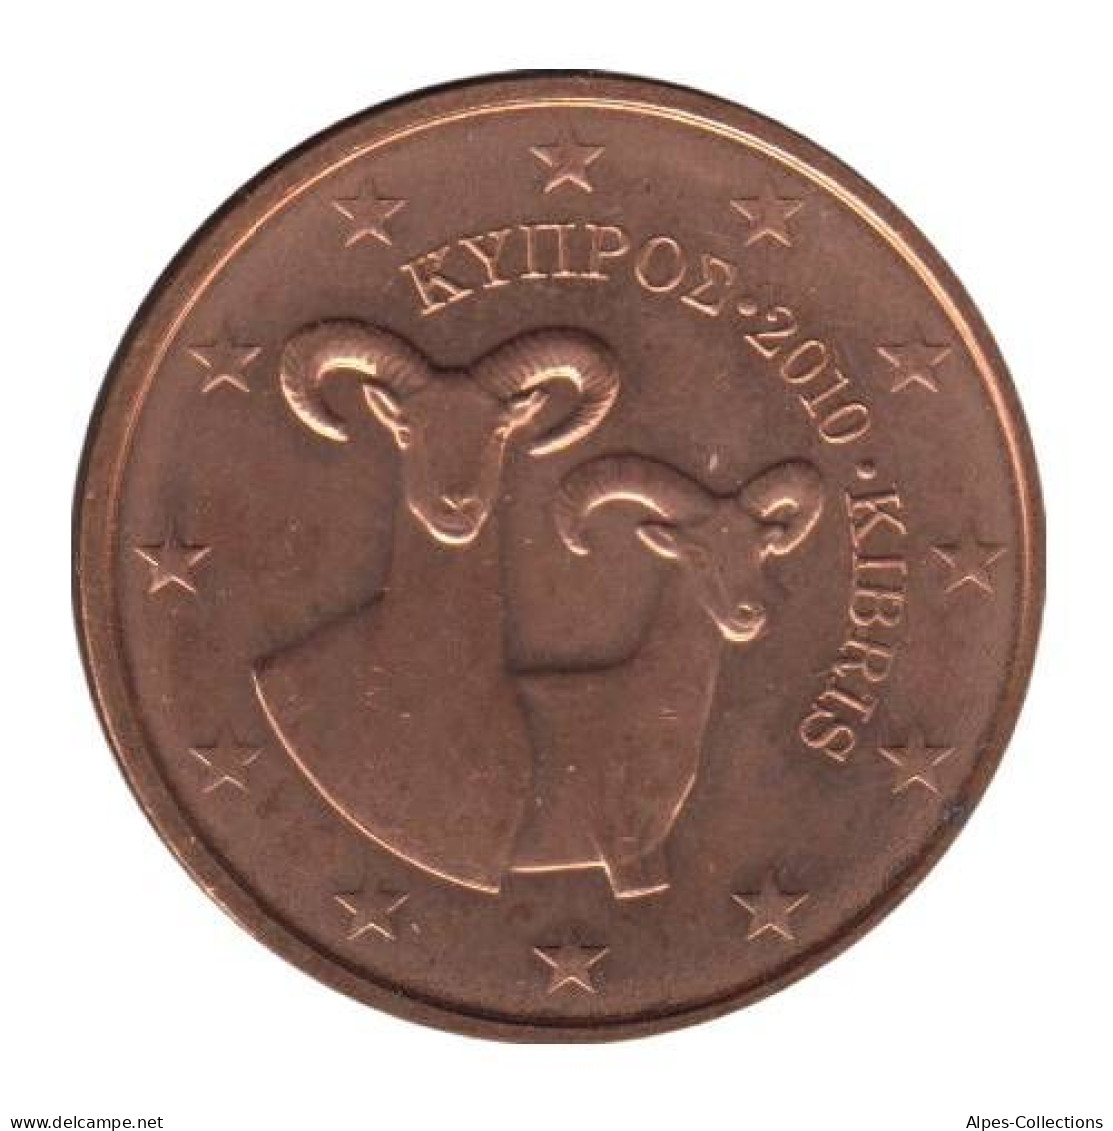 CH00210.1 - CHYPRE - 2 Cents D'euro - 2010 - Chipre